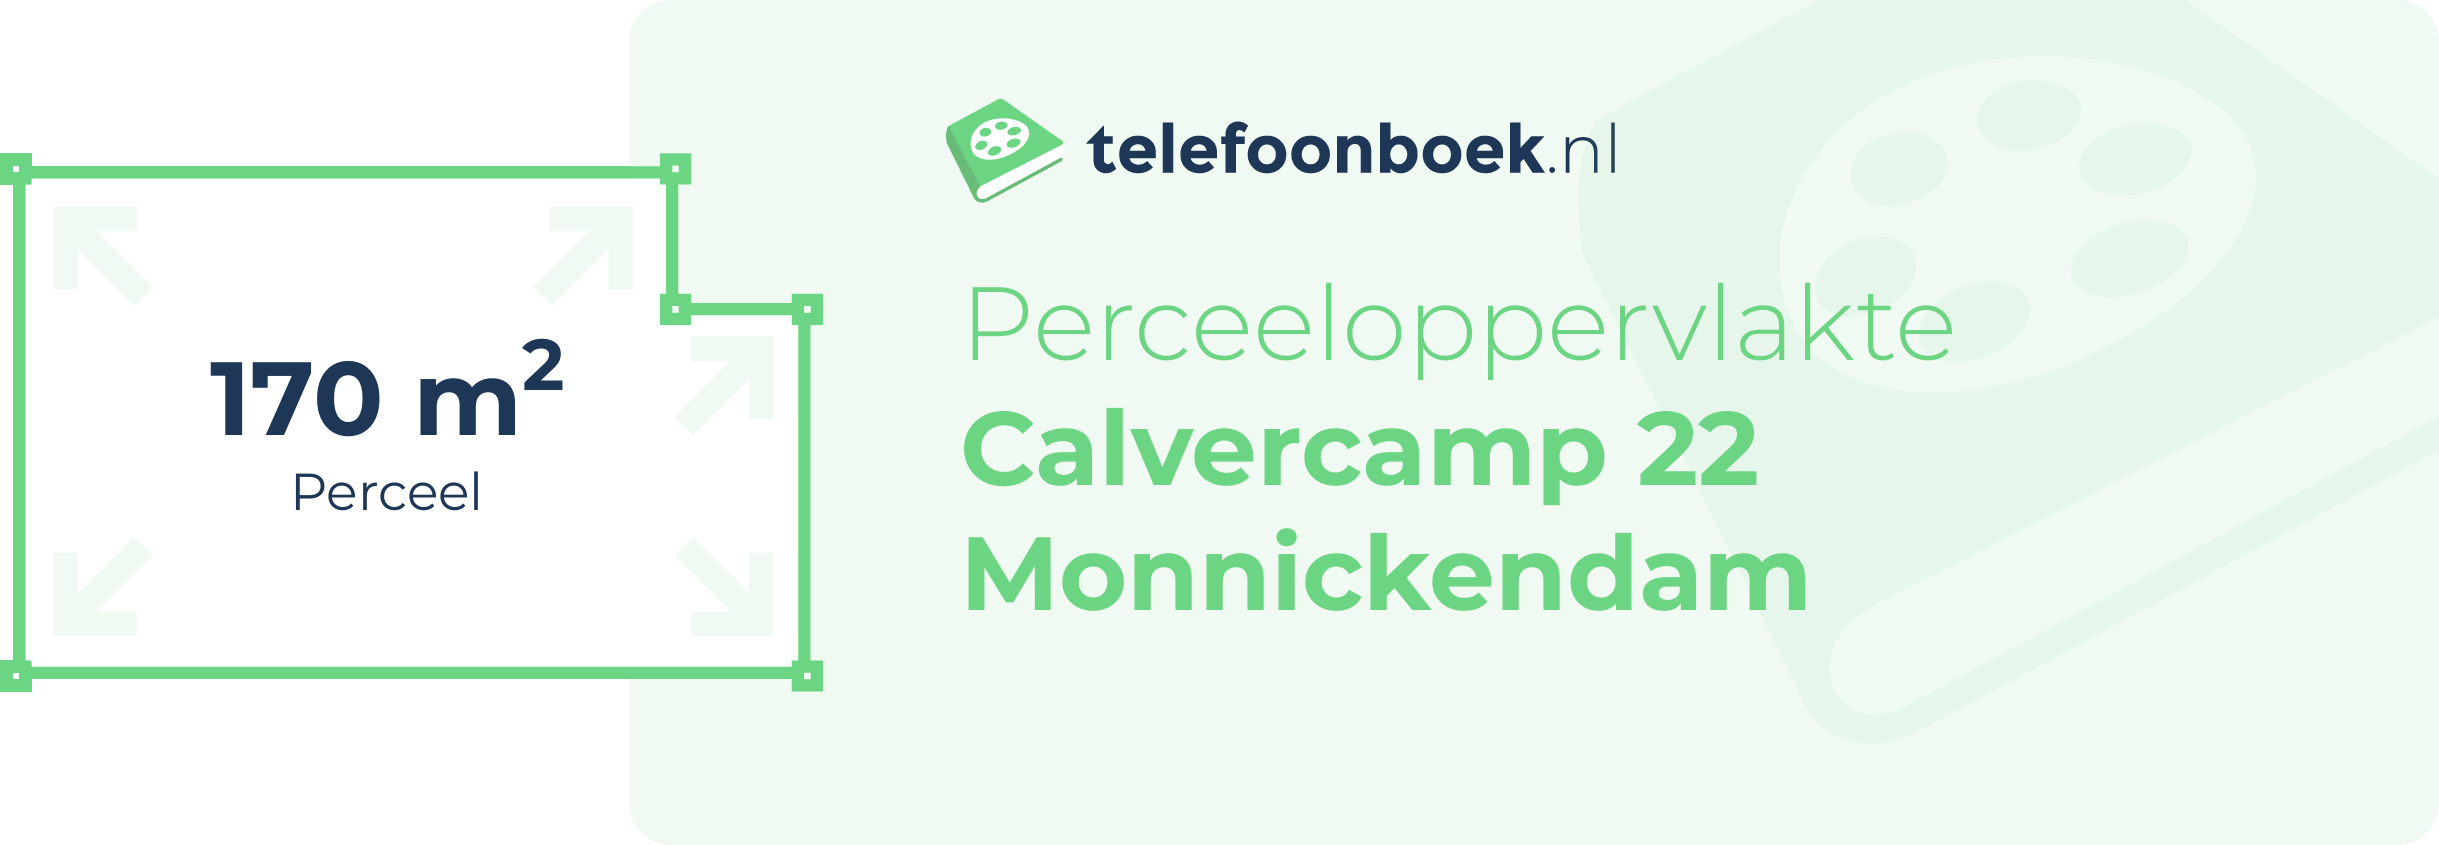 Perceeloppervlakte Calvercamp 22 Monnickendam